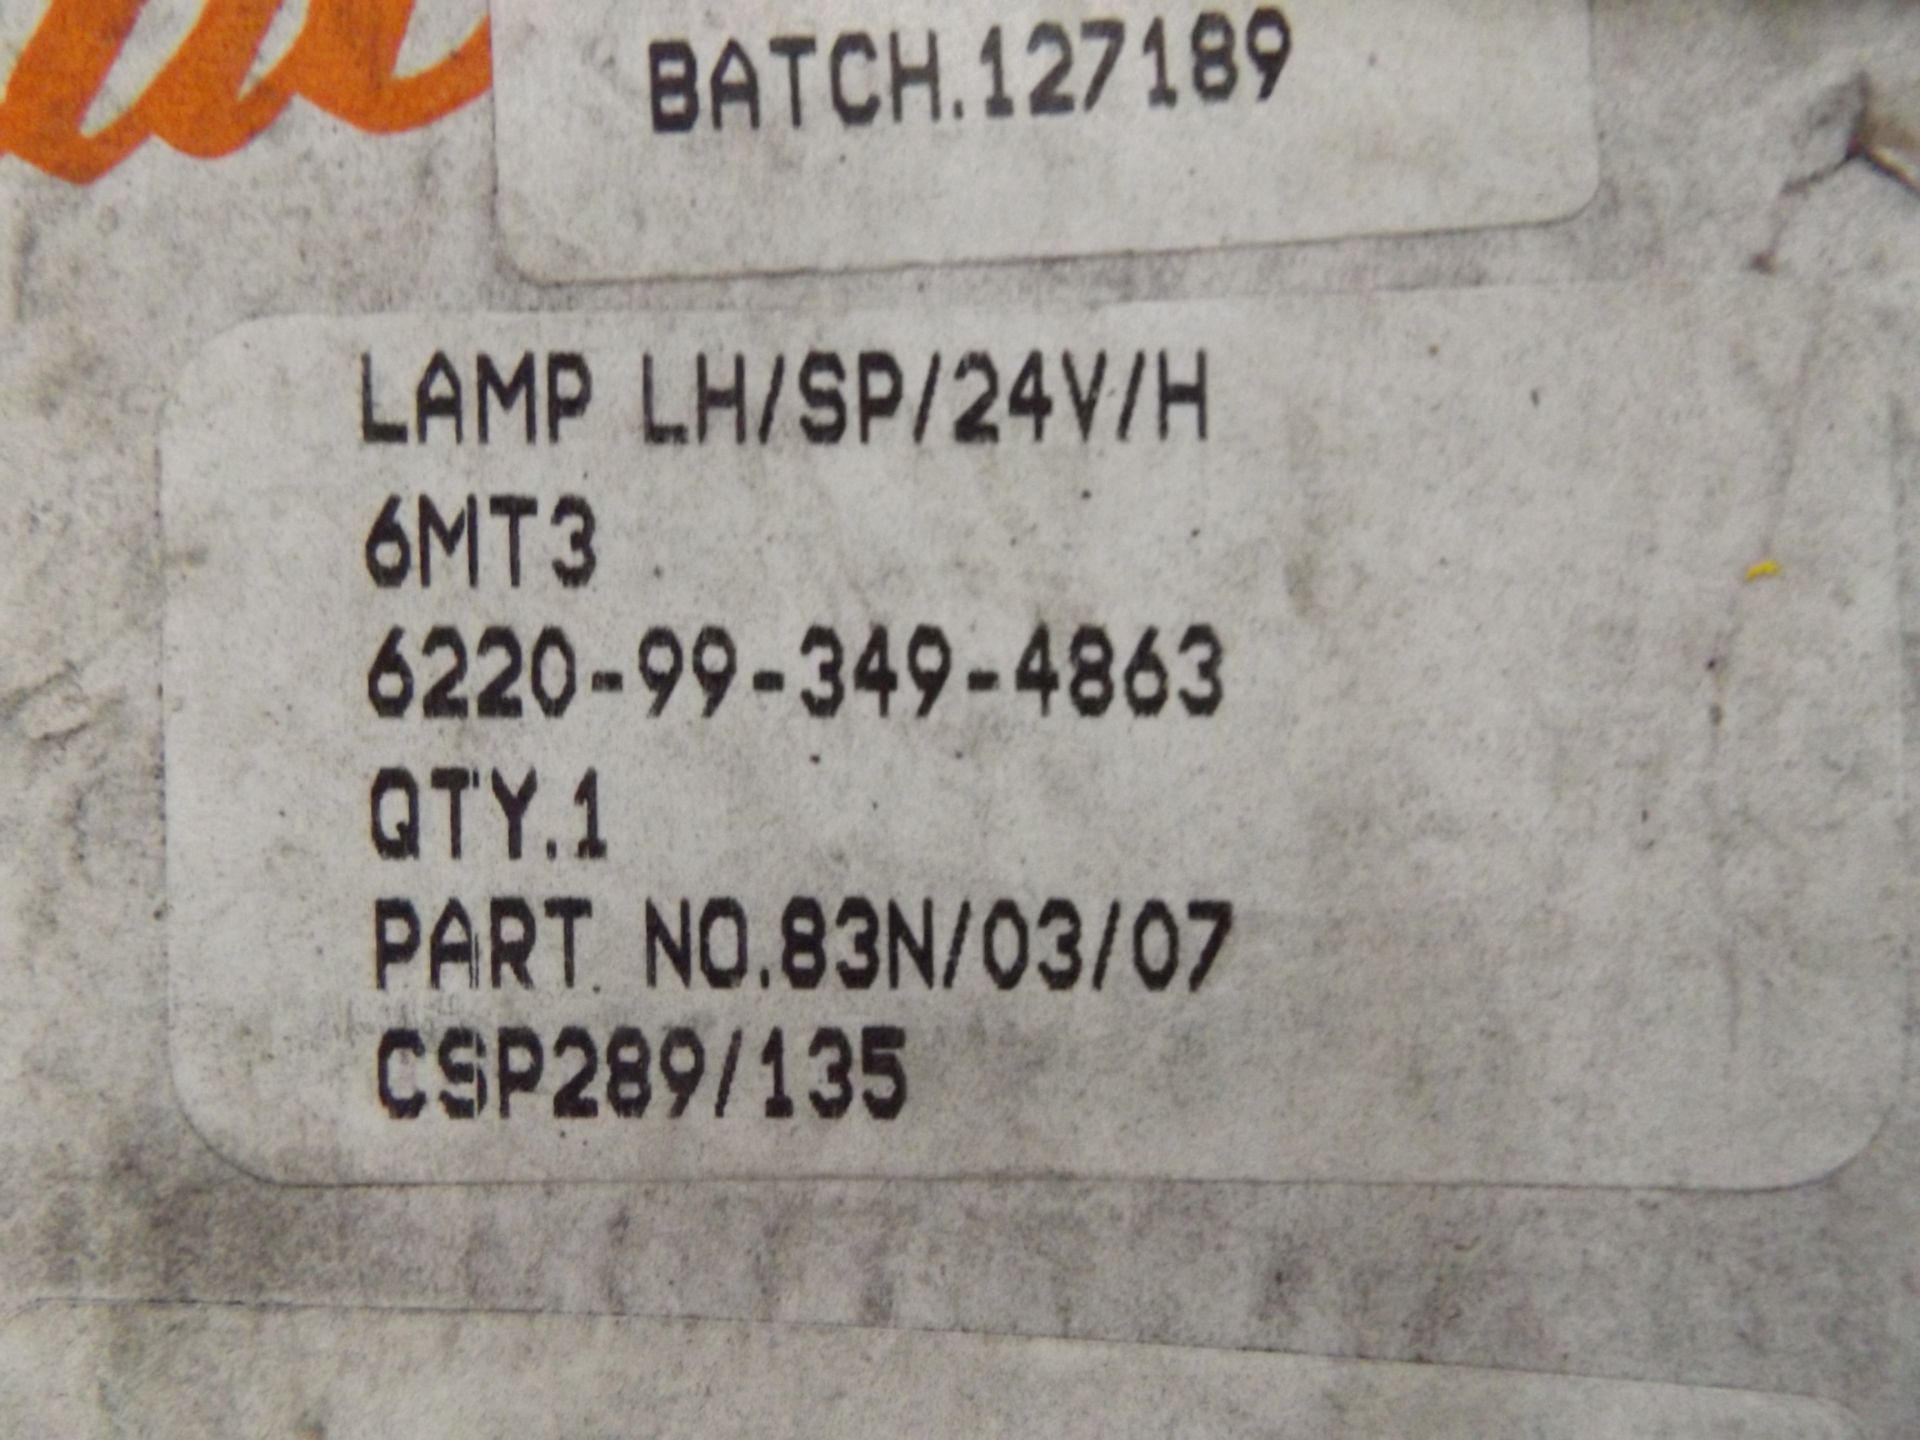 11 x Rubbolite Rear Lamp Units P/No 83N/03/07 - Image 4 of 6